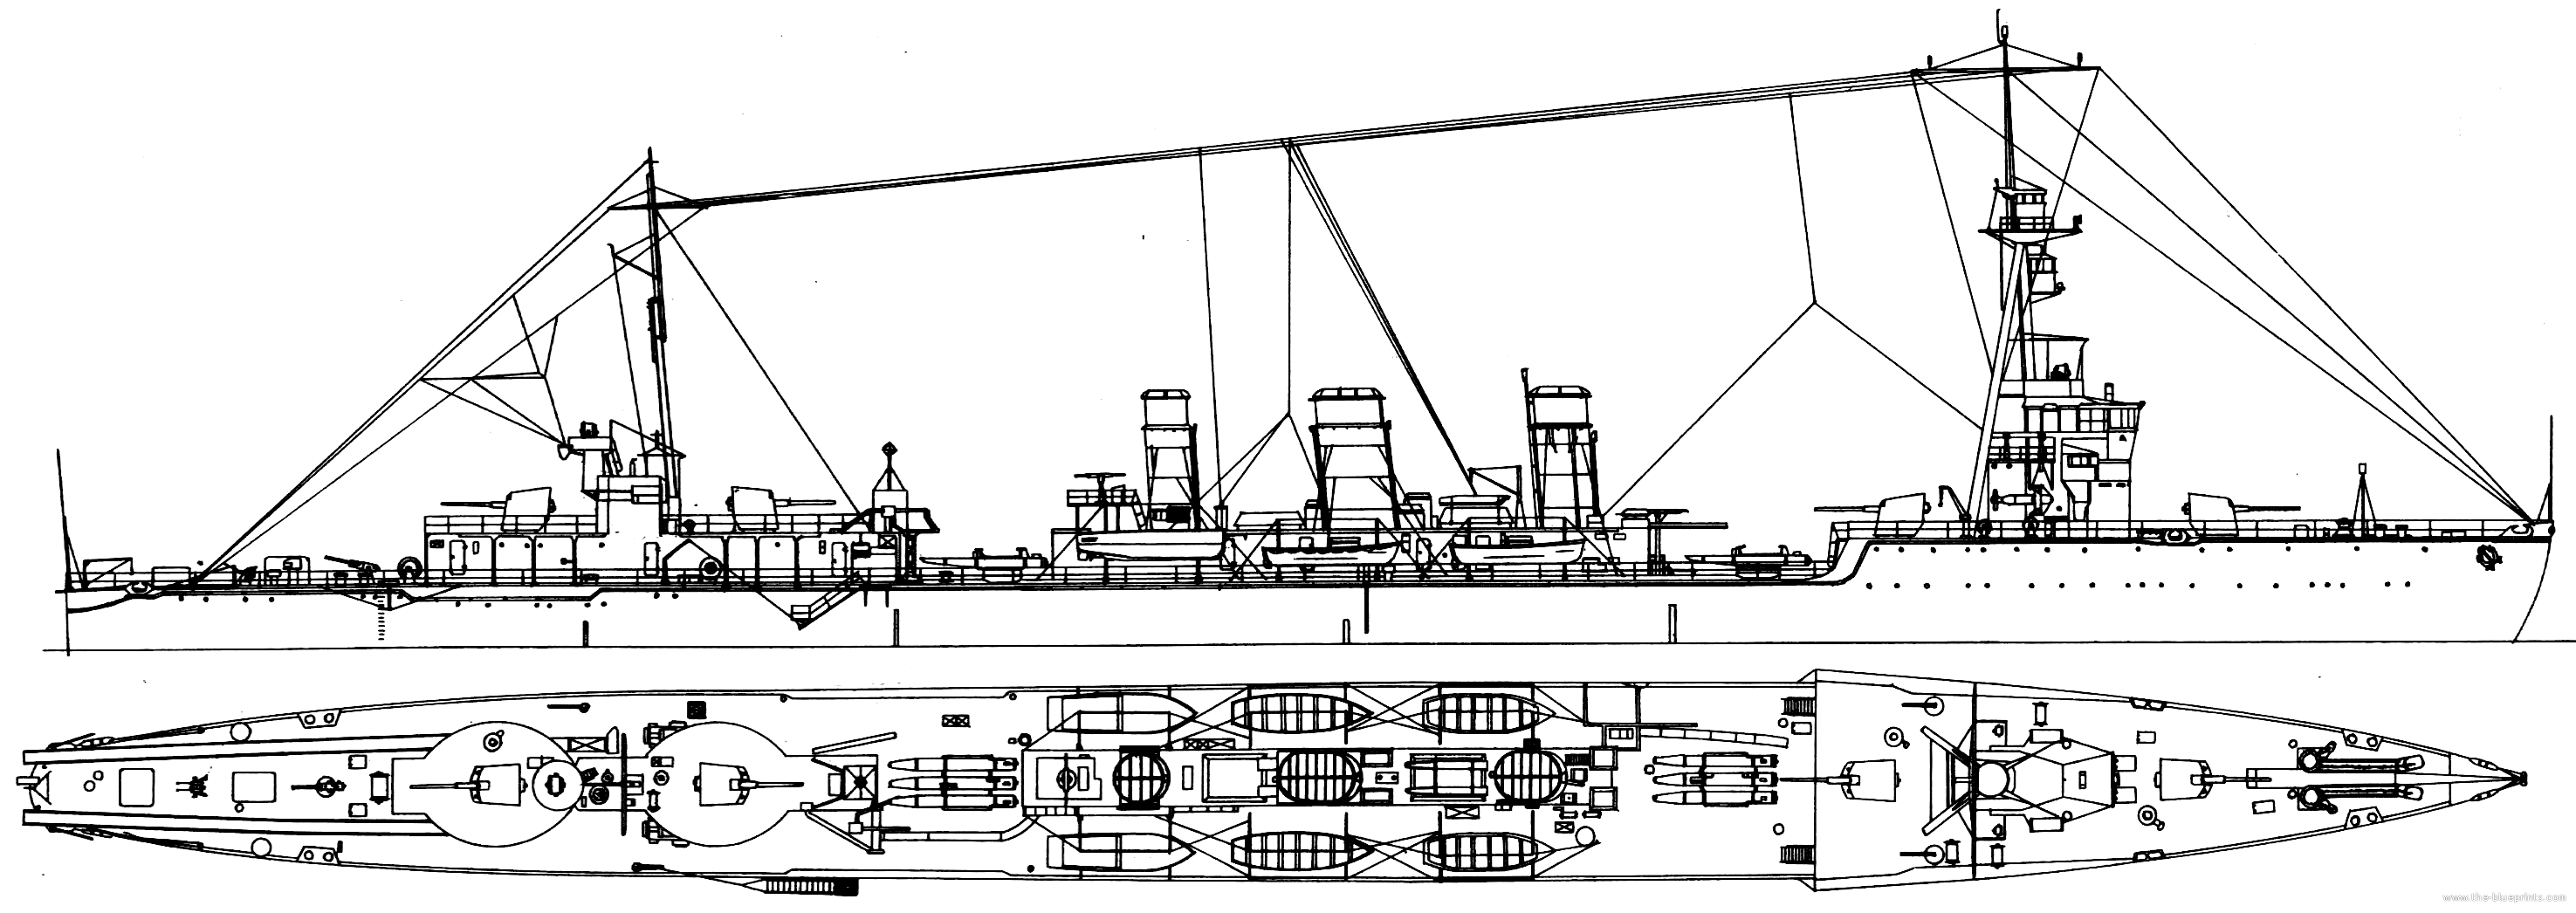 blog424-04_ijn-tenryu-1939-lighy-cruiser.png